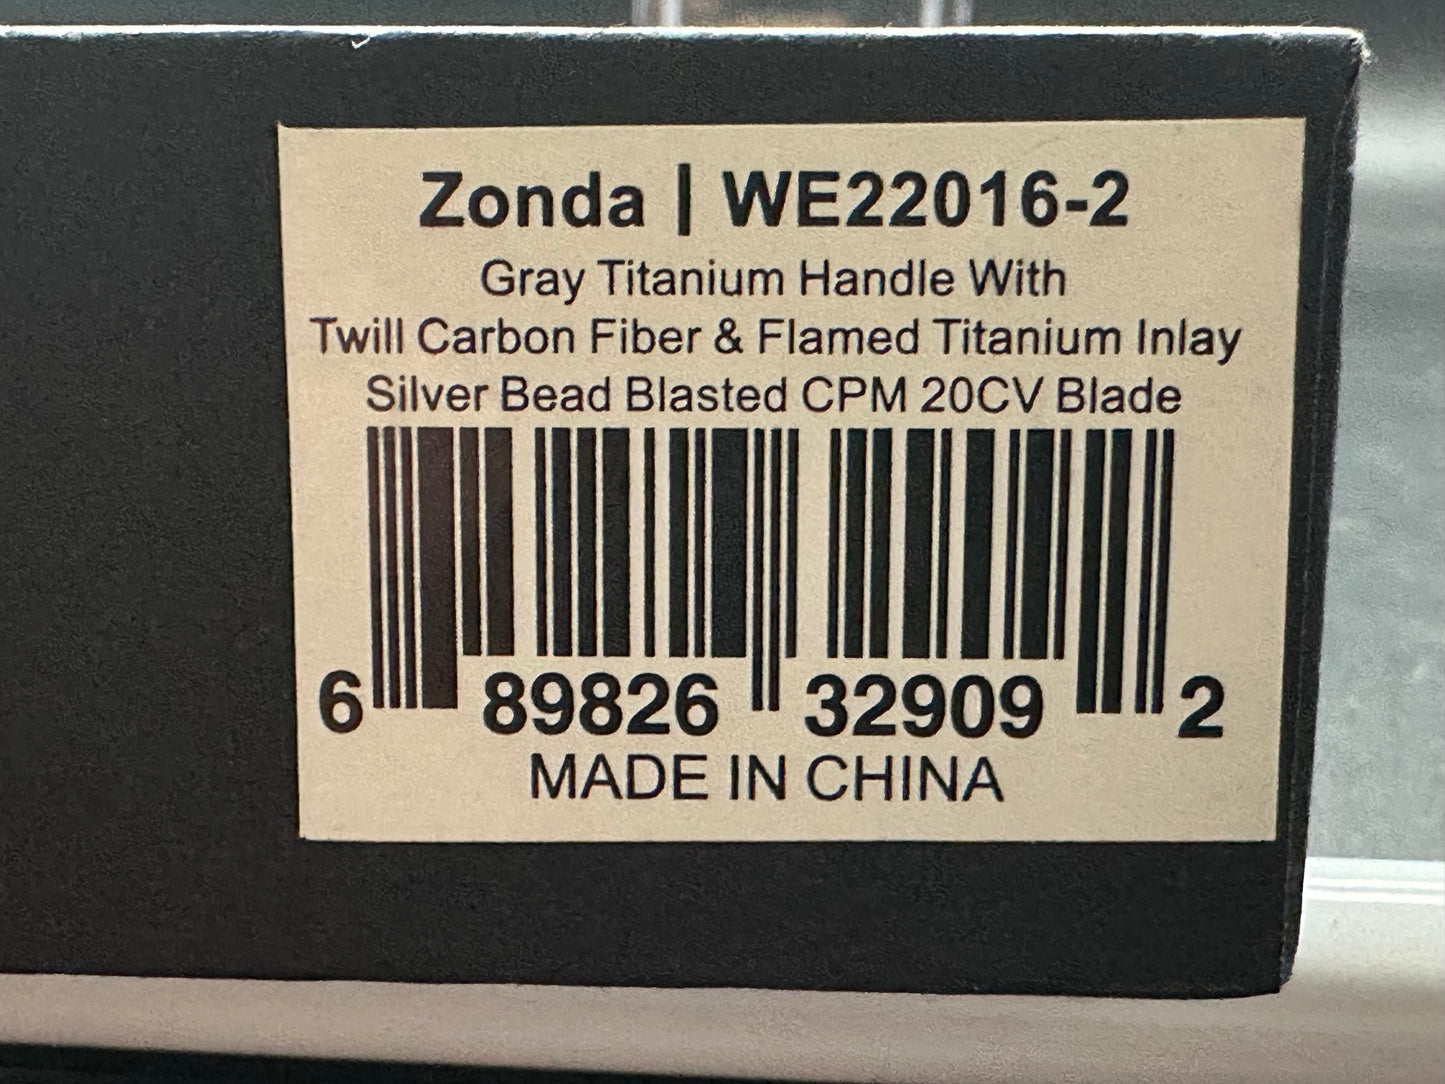 WE ZONDA TITANIUM/TWILL CARBON FIBER/FLAMED TITANIUM INLAY HANDLE 20CV